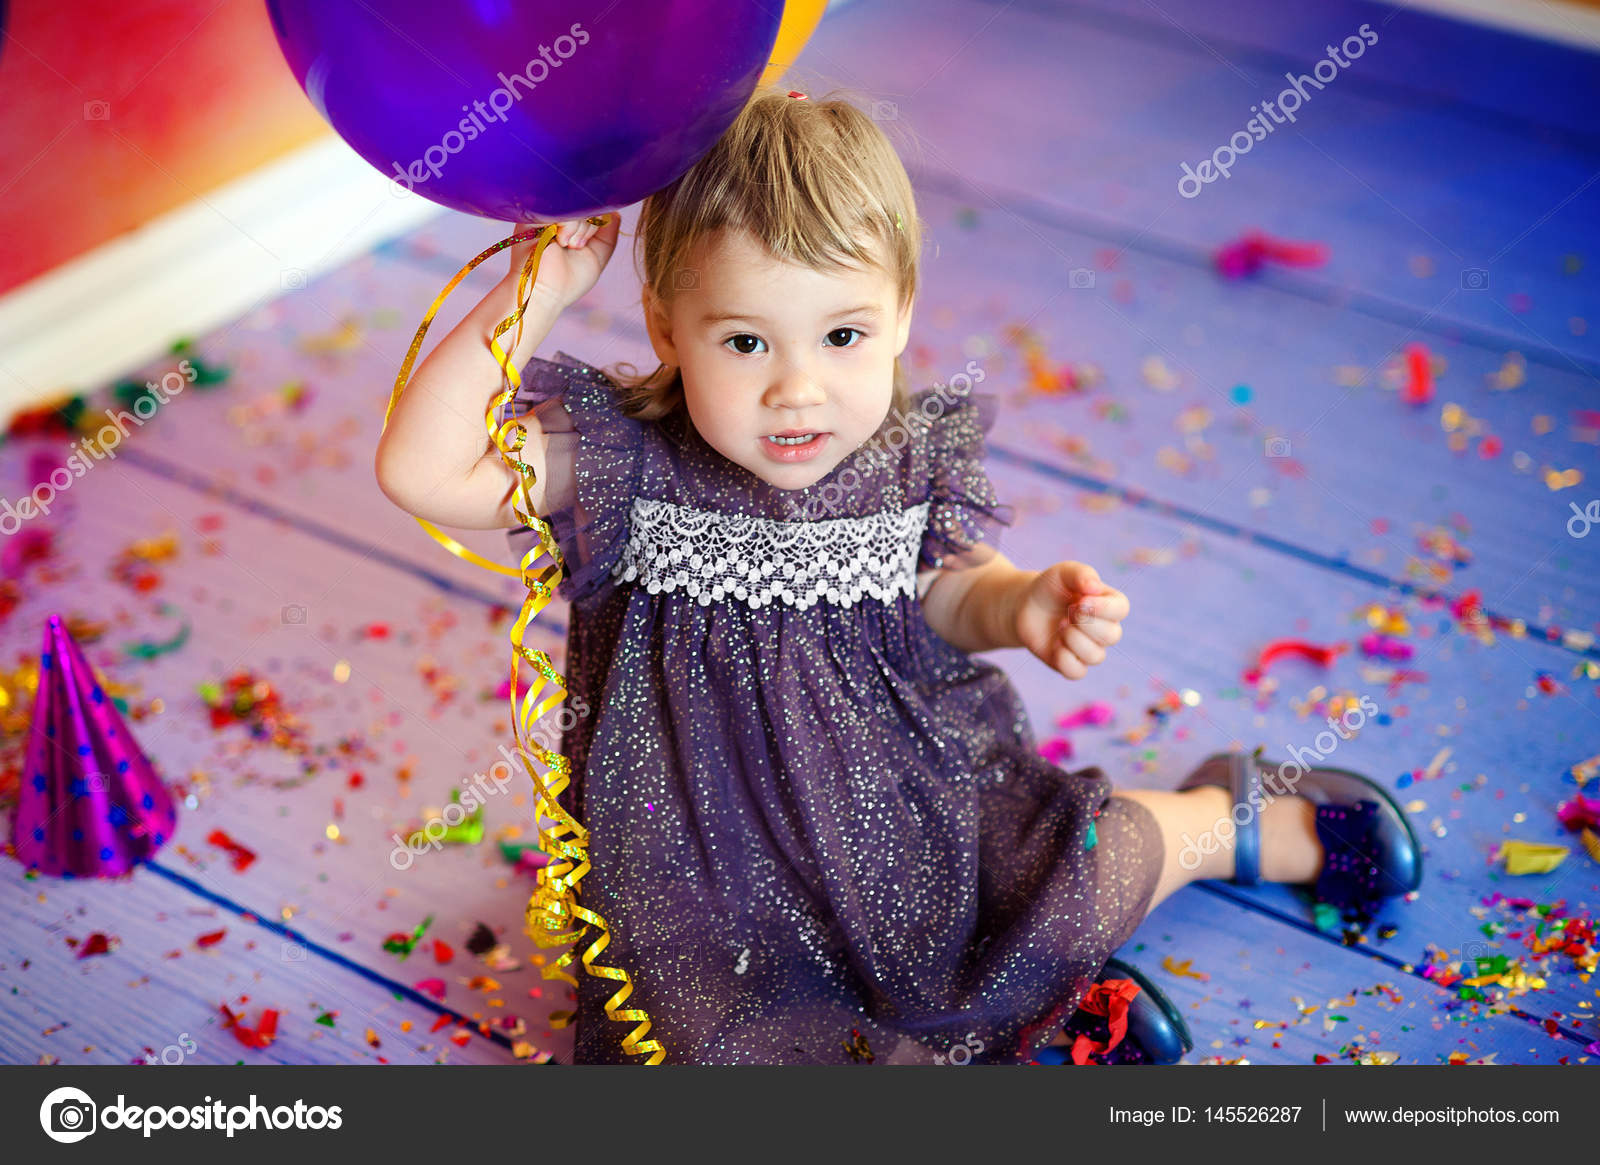 Cute 1 year old birthday themes | Cute baby girl 1-2 year old sitting ...